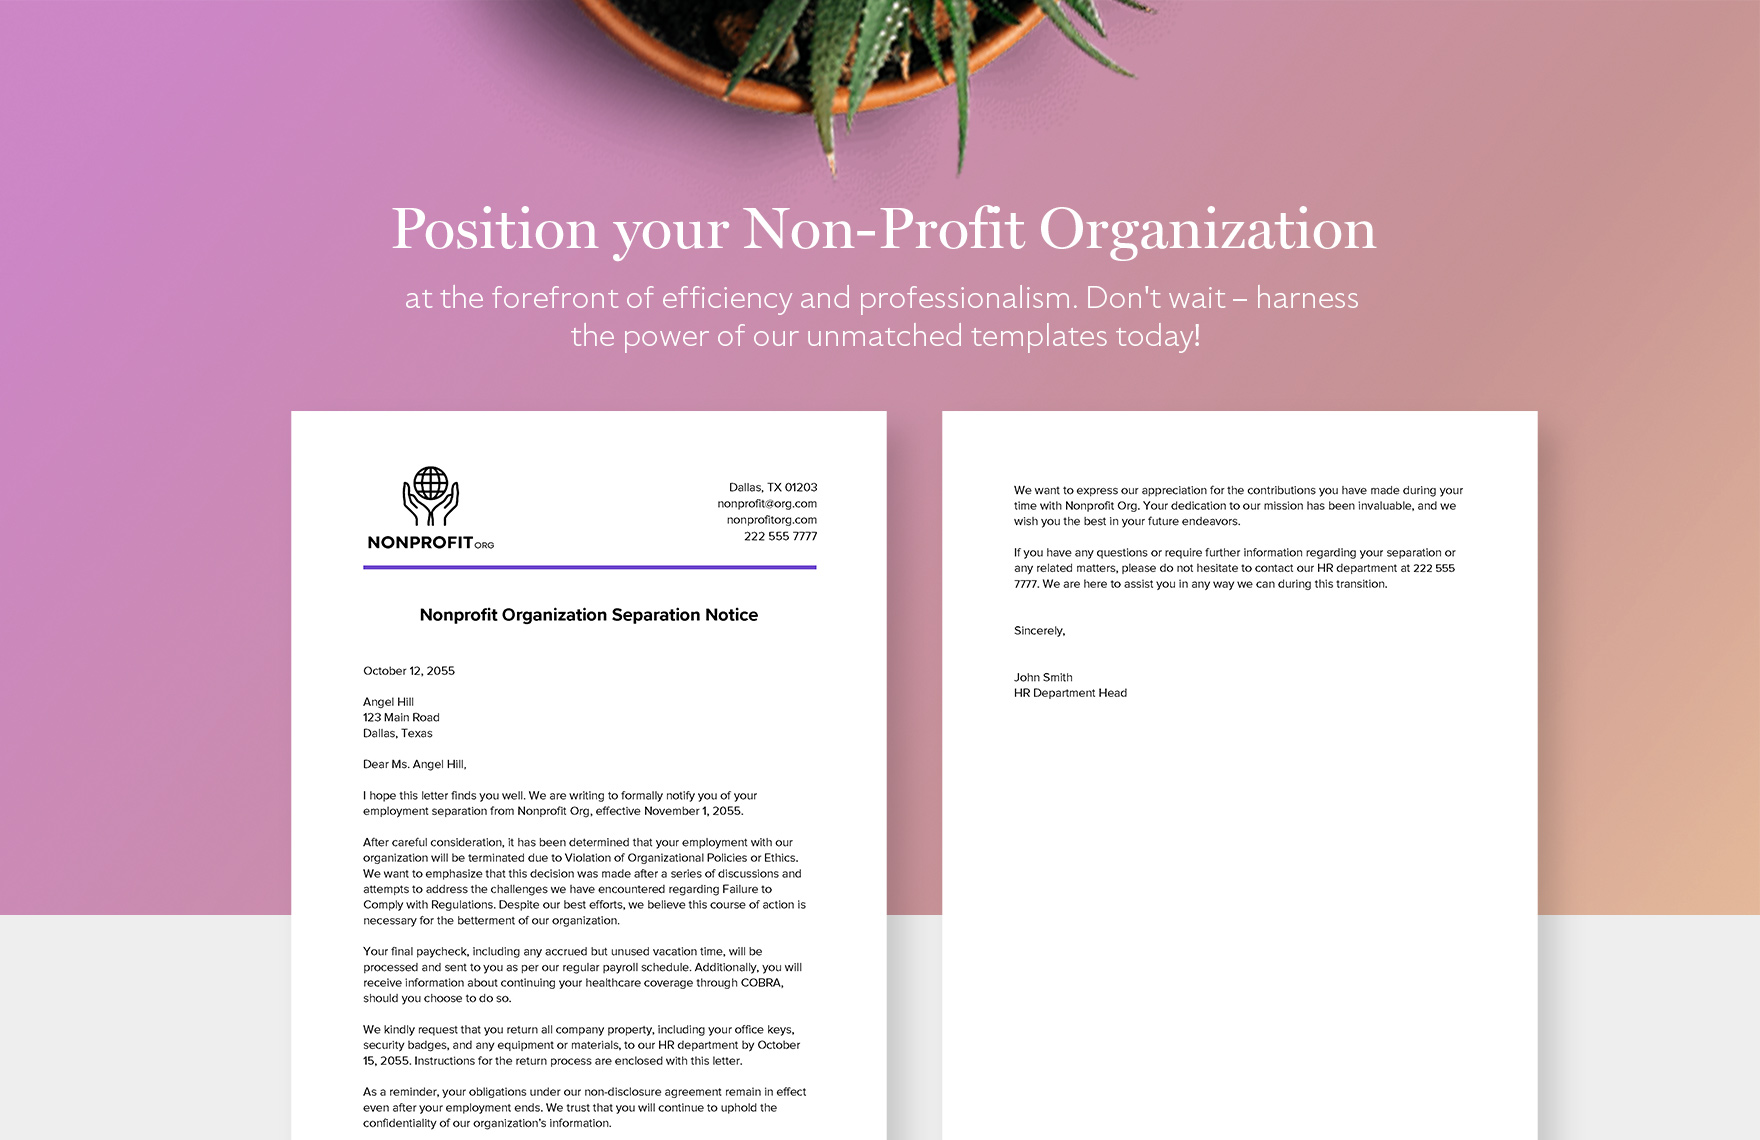 Nonprofit Organization Separation Notice Template